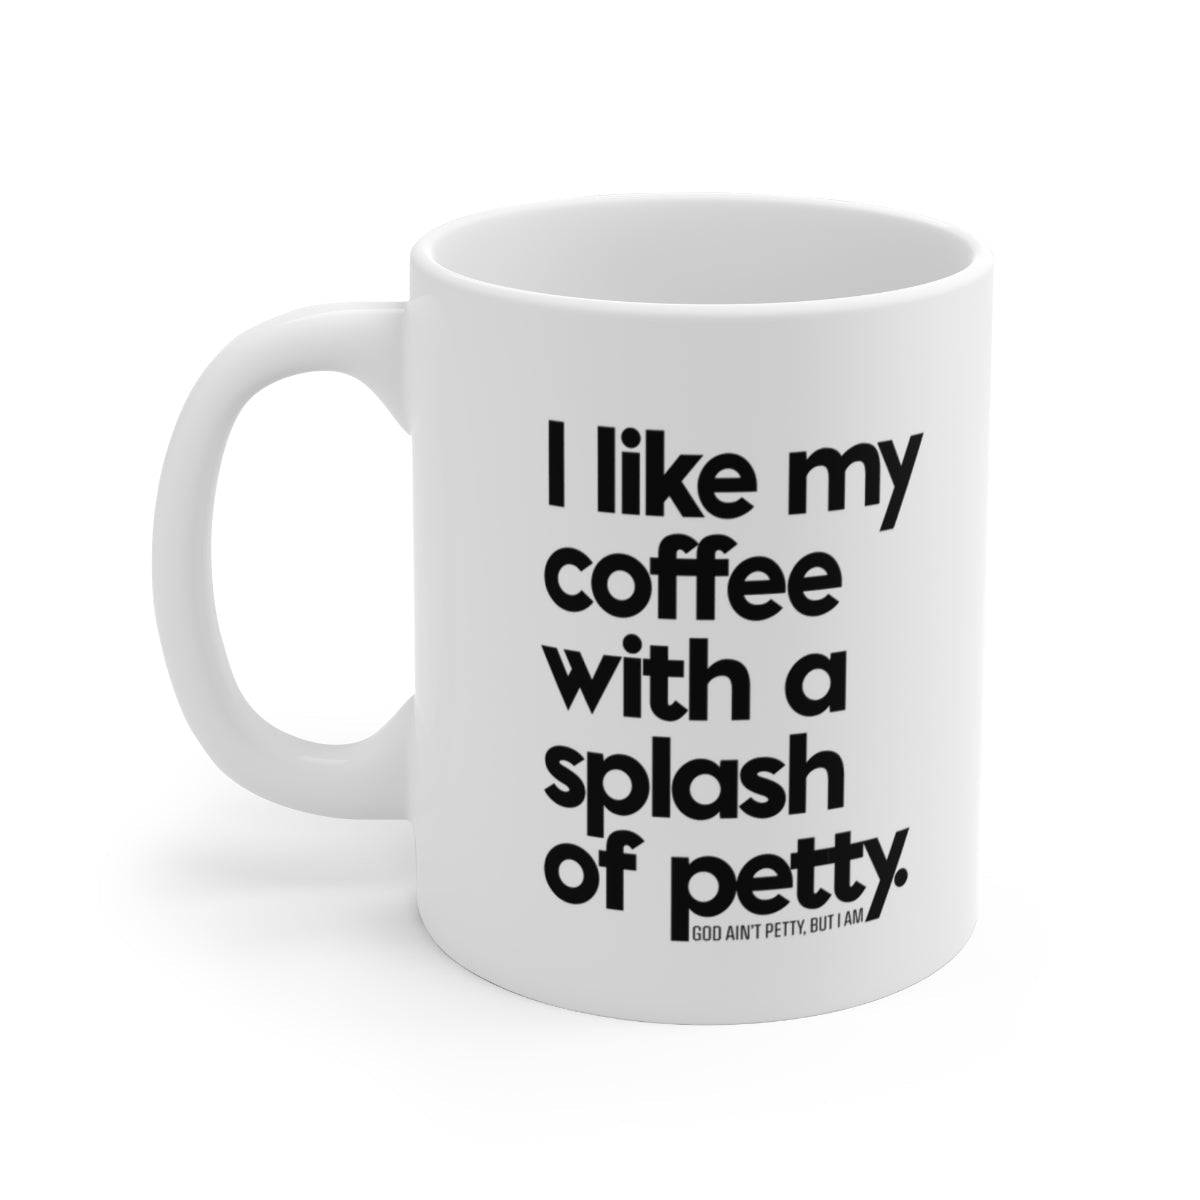 I Like my Coffee with a Splash of Petty Mug 11oz (White/Black)-Mug-The Original God Ain't Petty But I Am